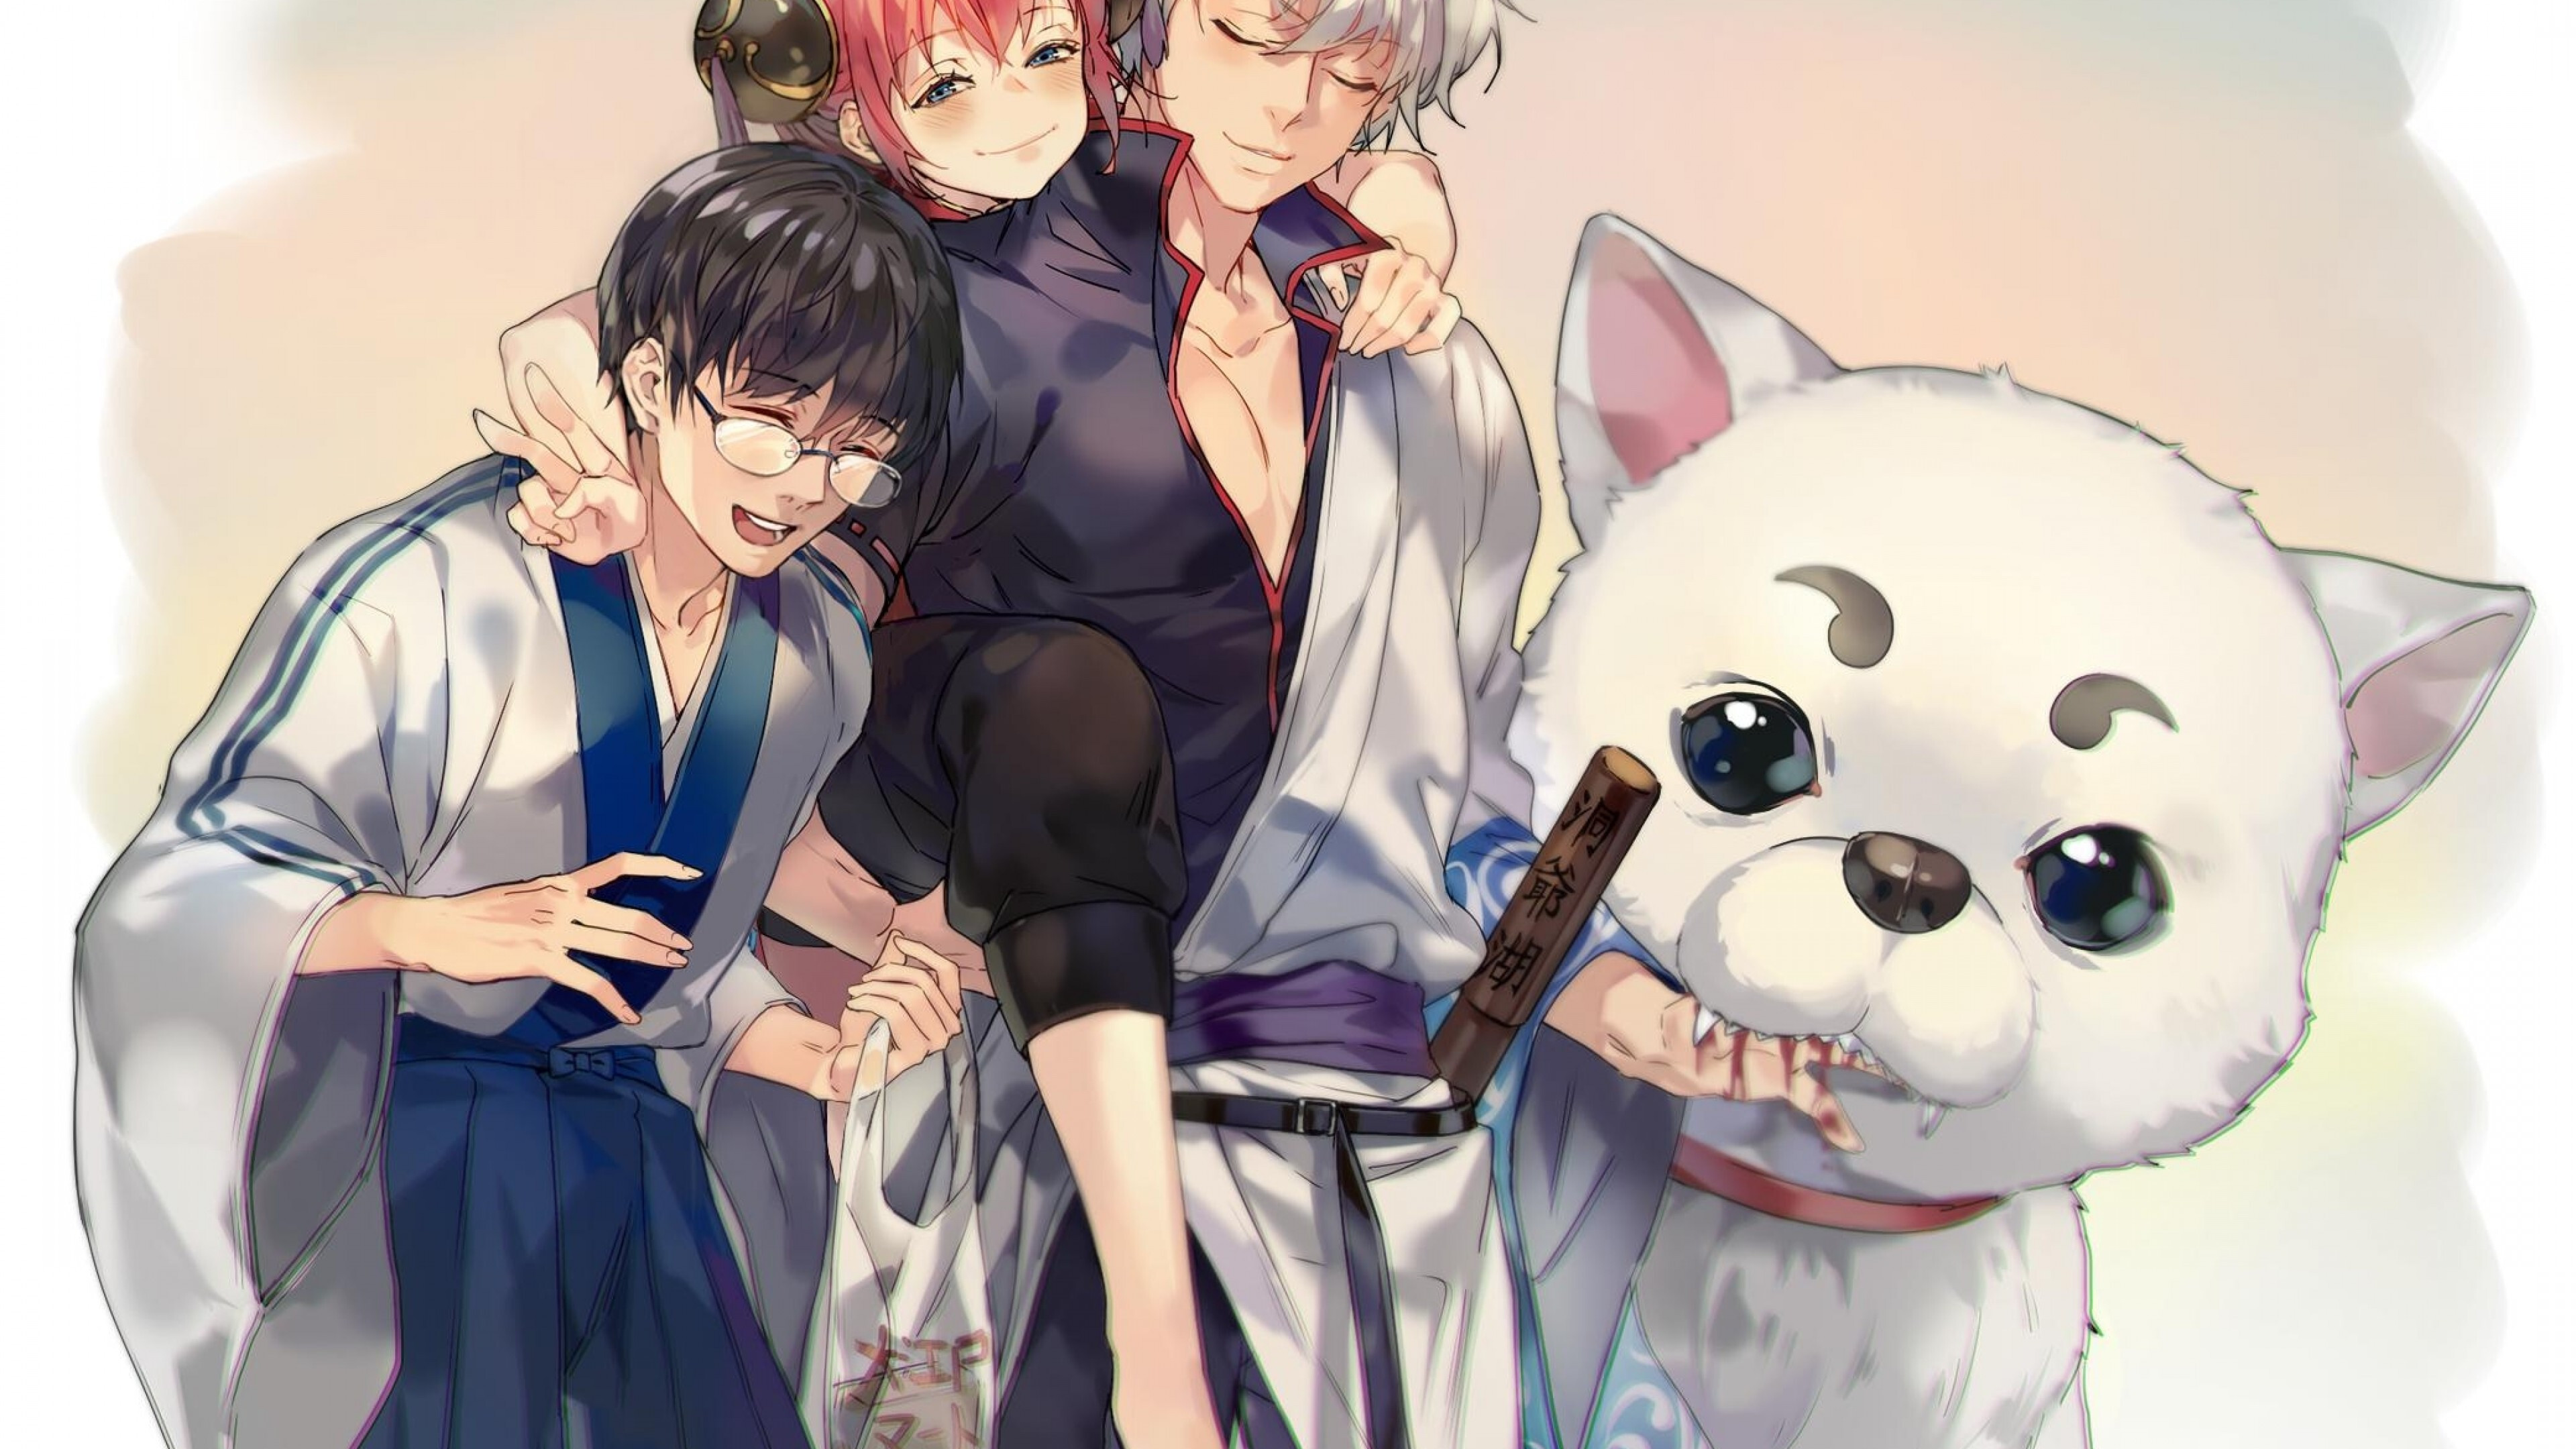 Gintama (TV Series): Kagura, Sakata Gintoki, Sadaharu, A member and a pet of the Yorozuya, A large white-furred dog with a red collar. 3840x2160 4K Wallpaper.